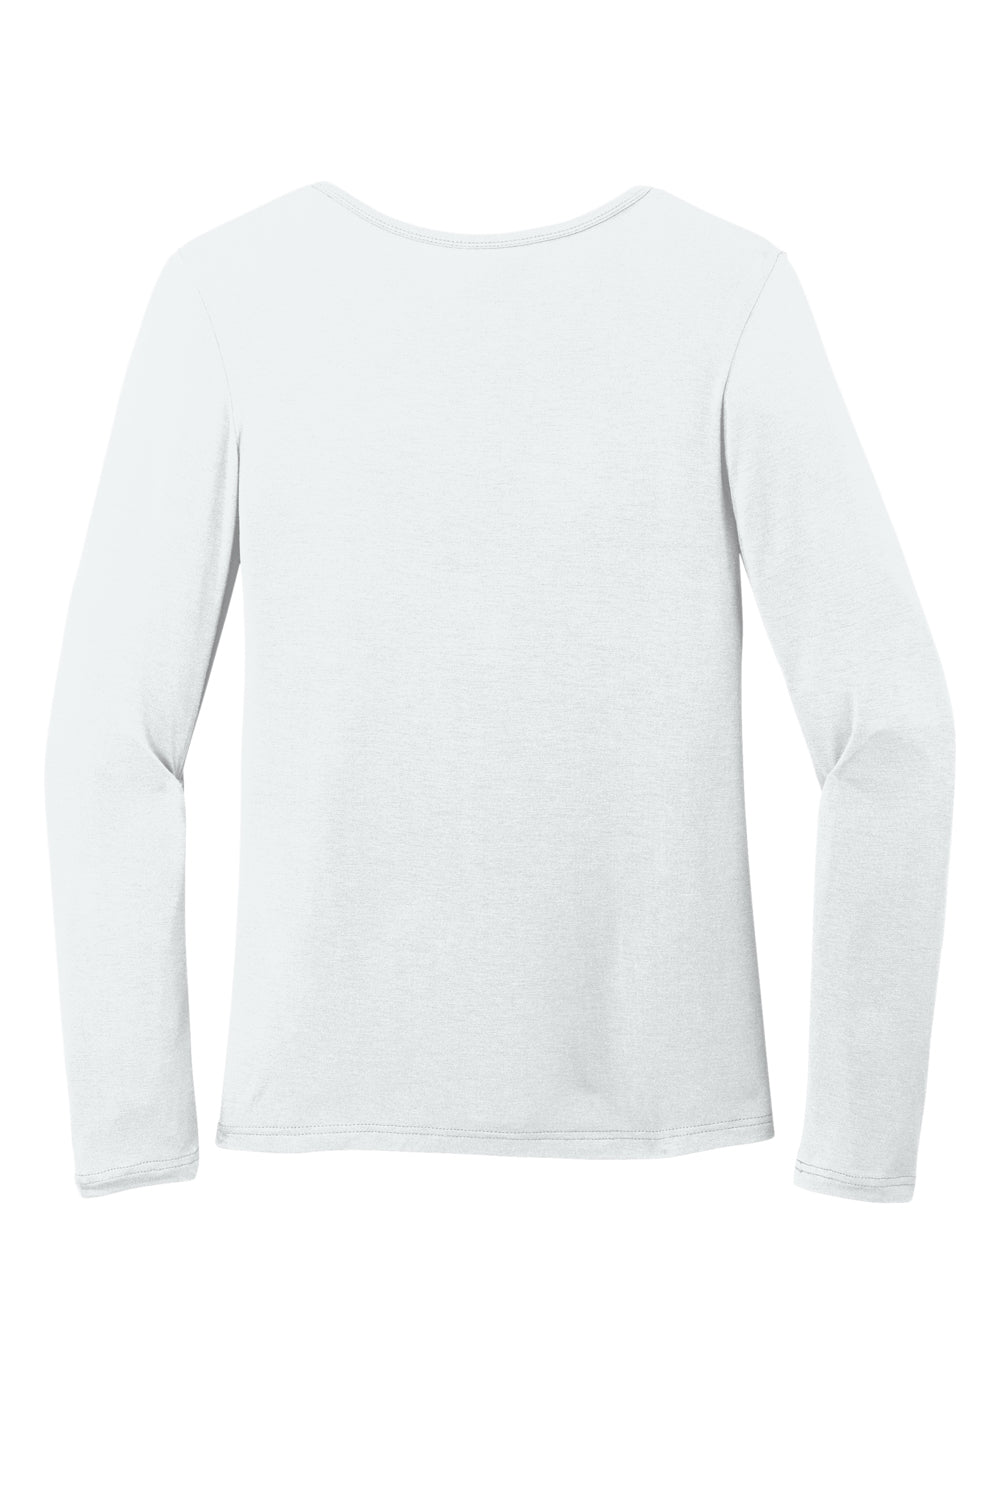 Wonderwink WW4029 Long Sleeve Crewneck Layer T-Shirt White Flat Back